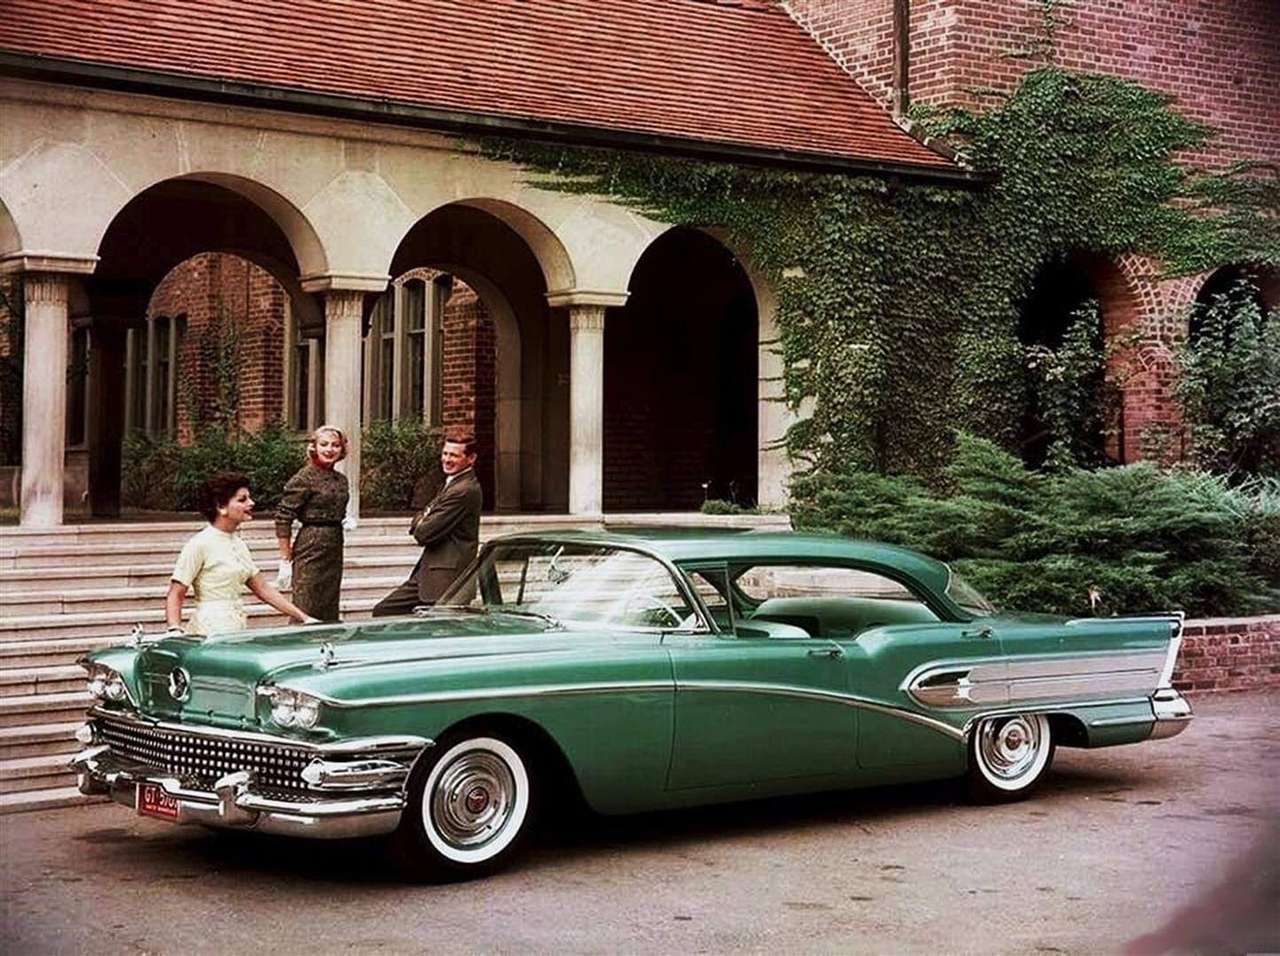 1958 Buick skládačky online